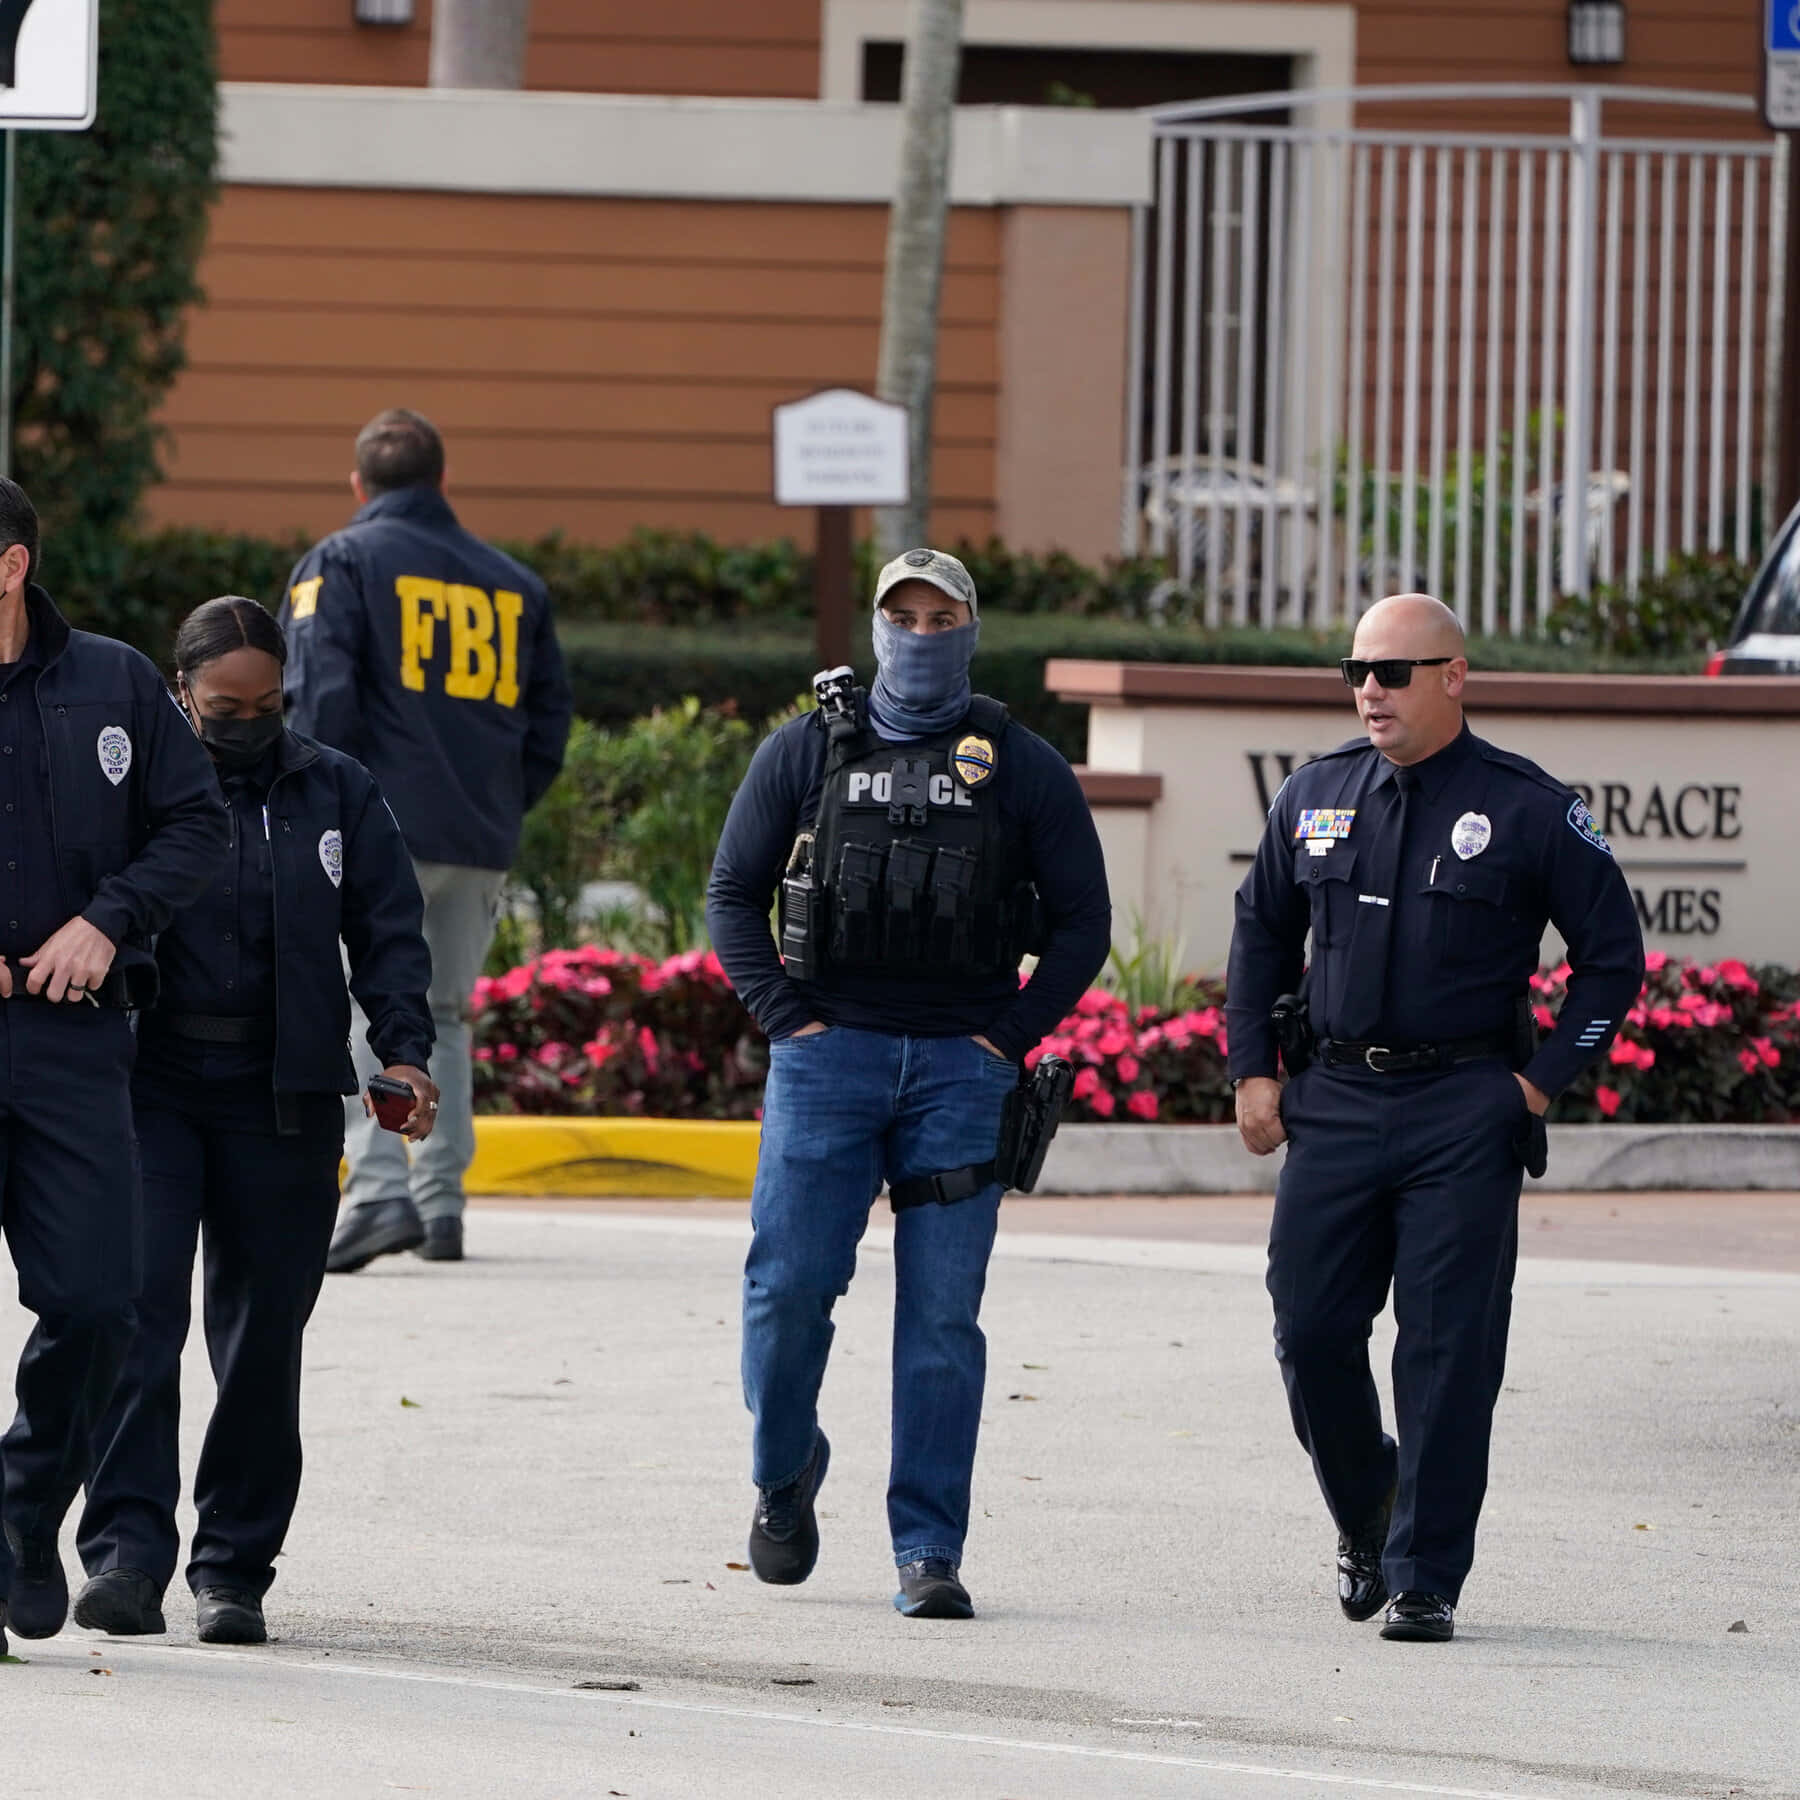 Fbi Agents Walk Down The Street In Uniform Background